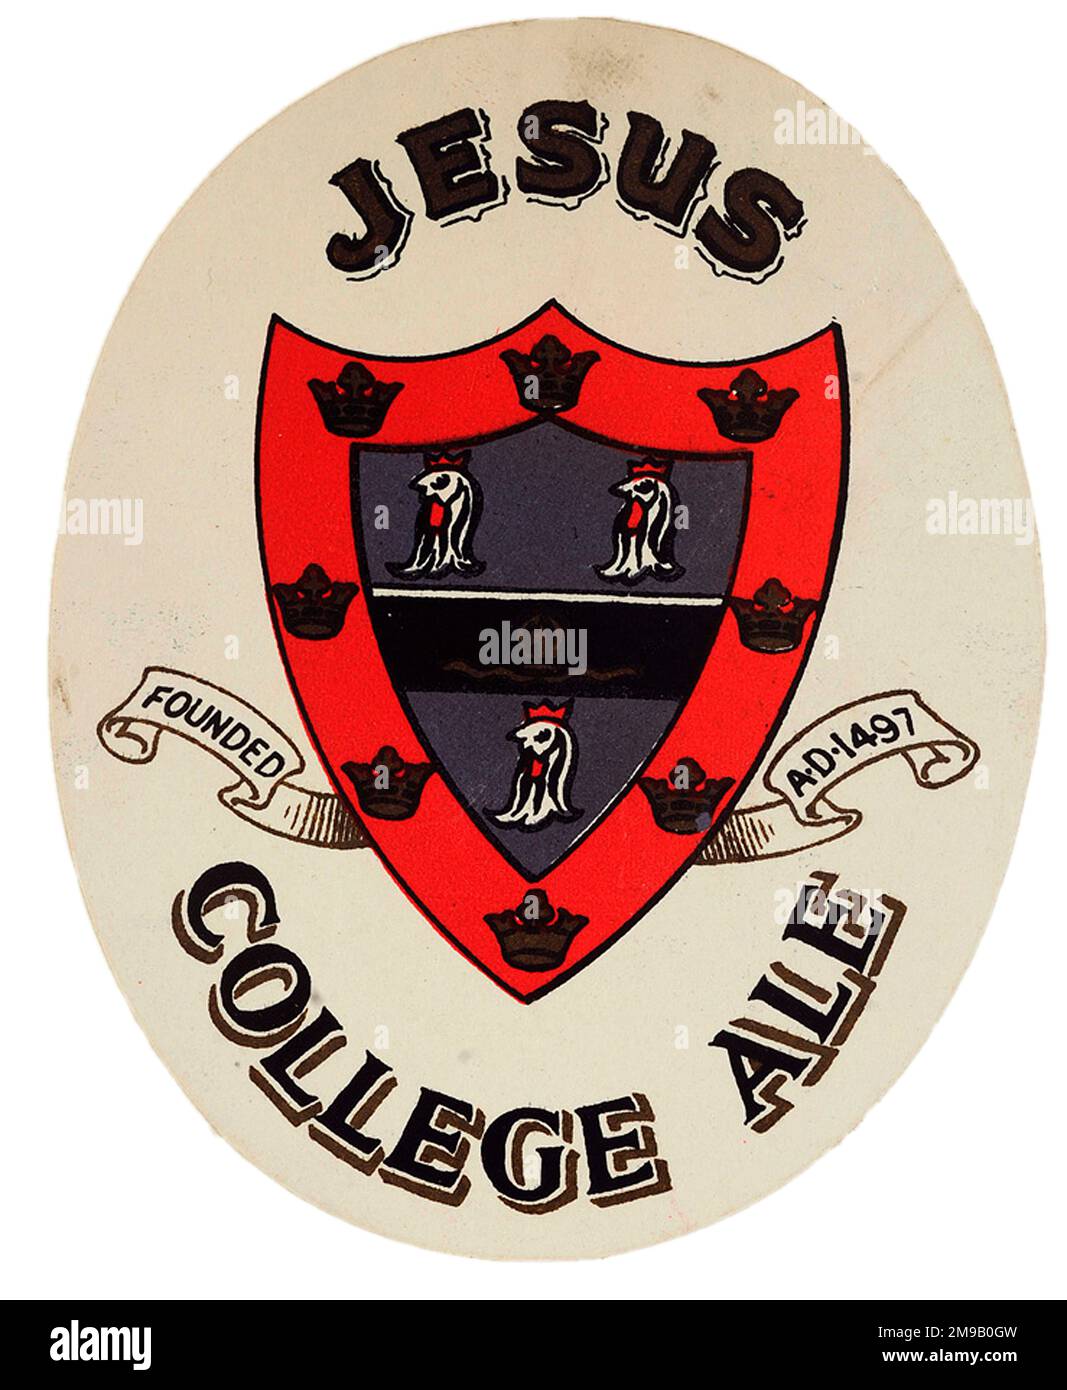 M&B Jesus College Ale Stock Photo